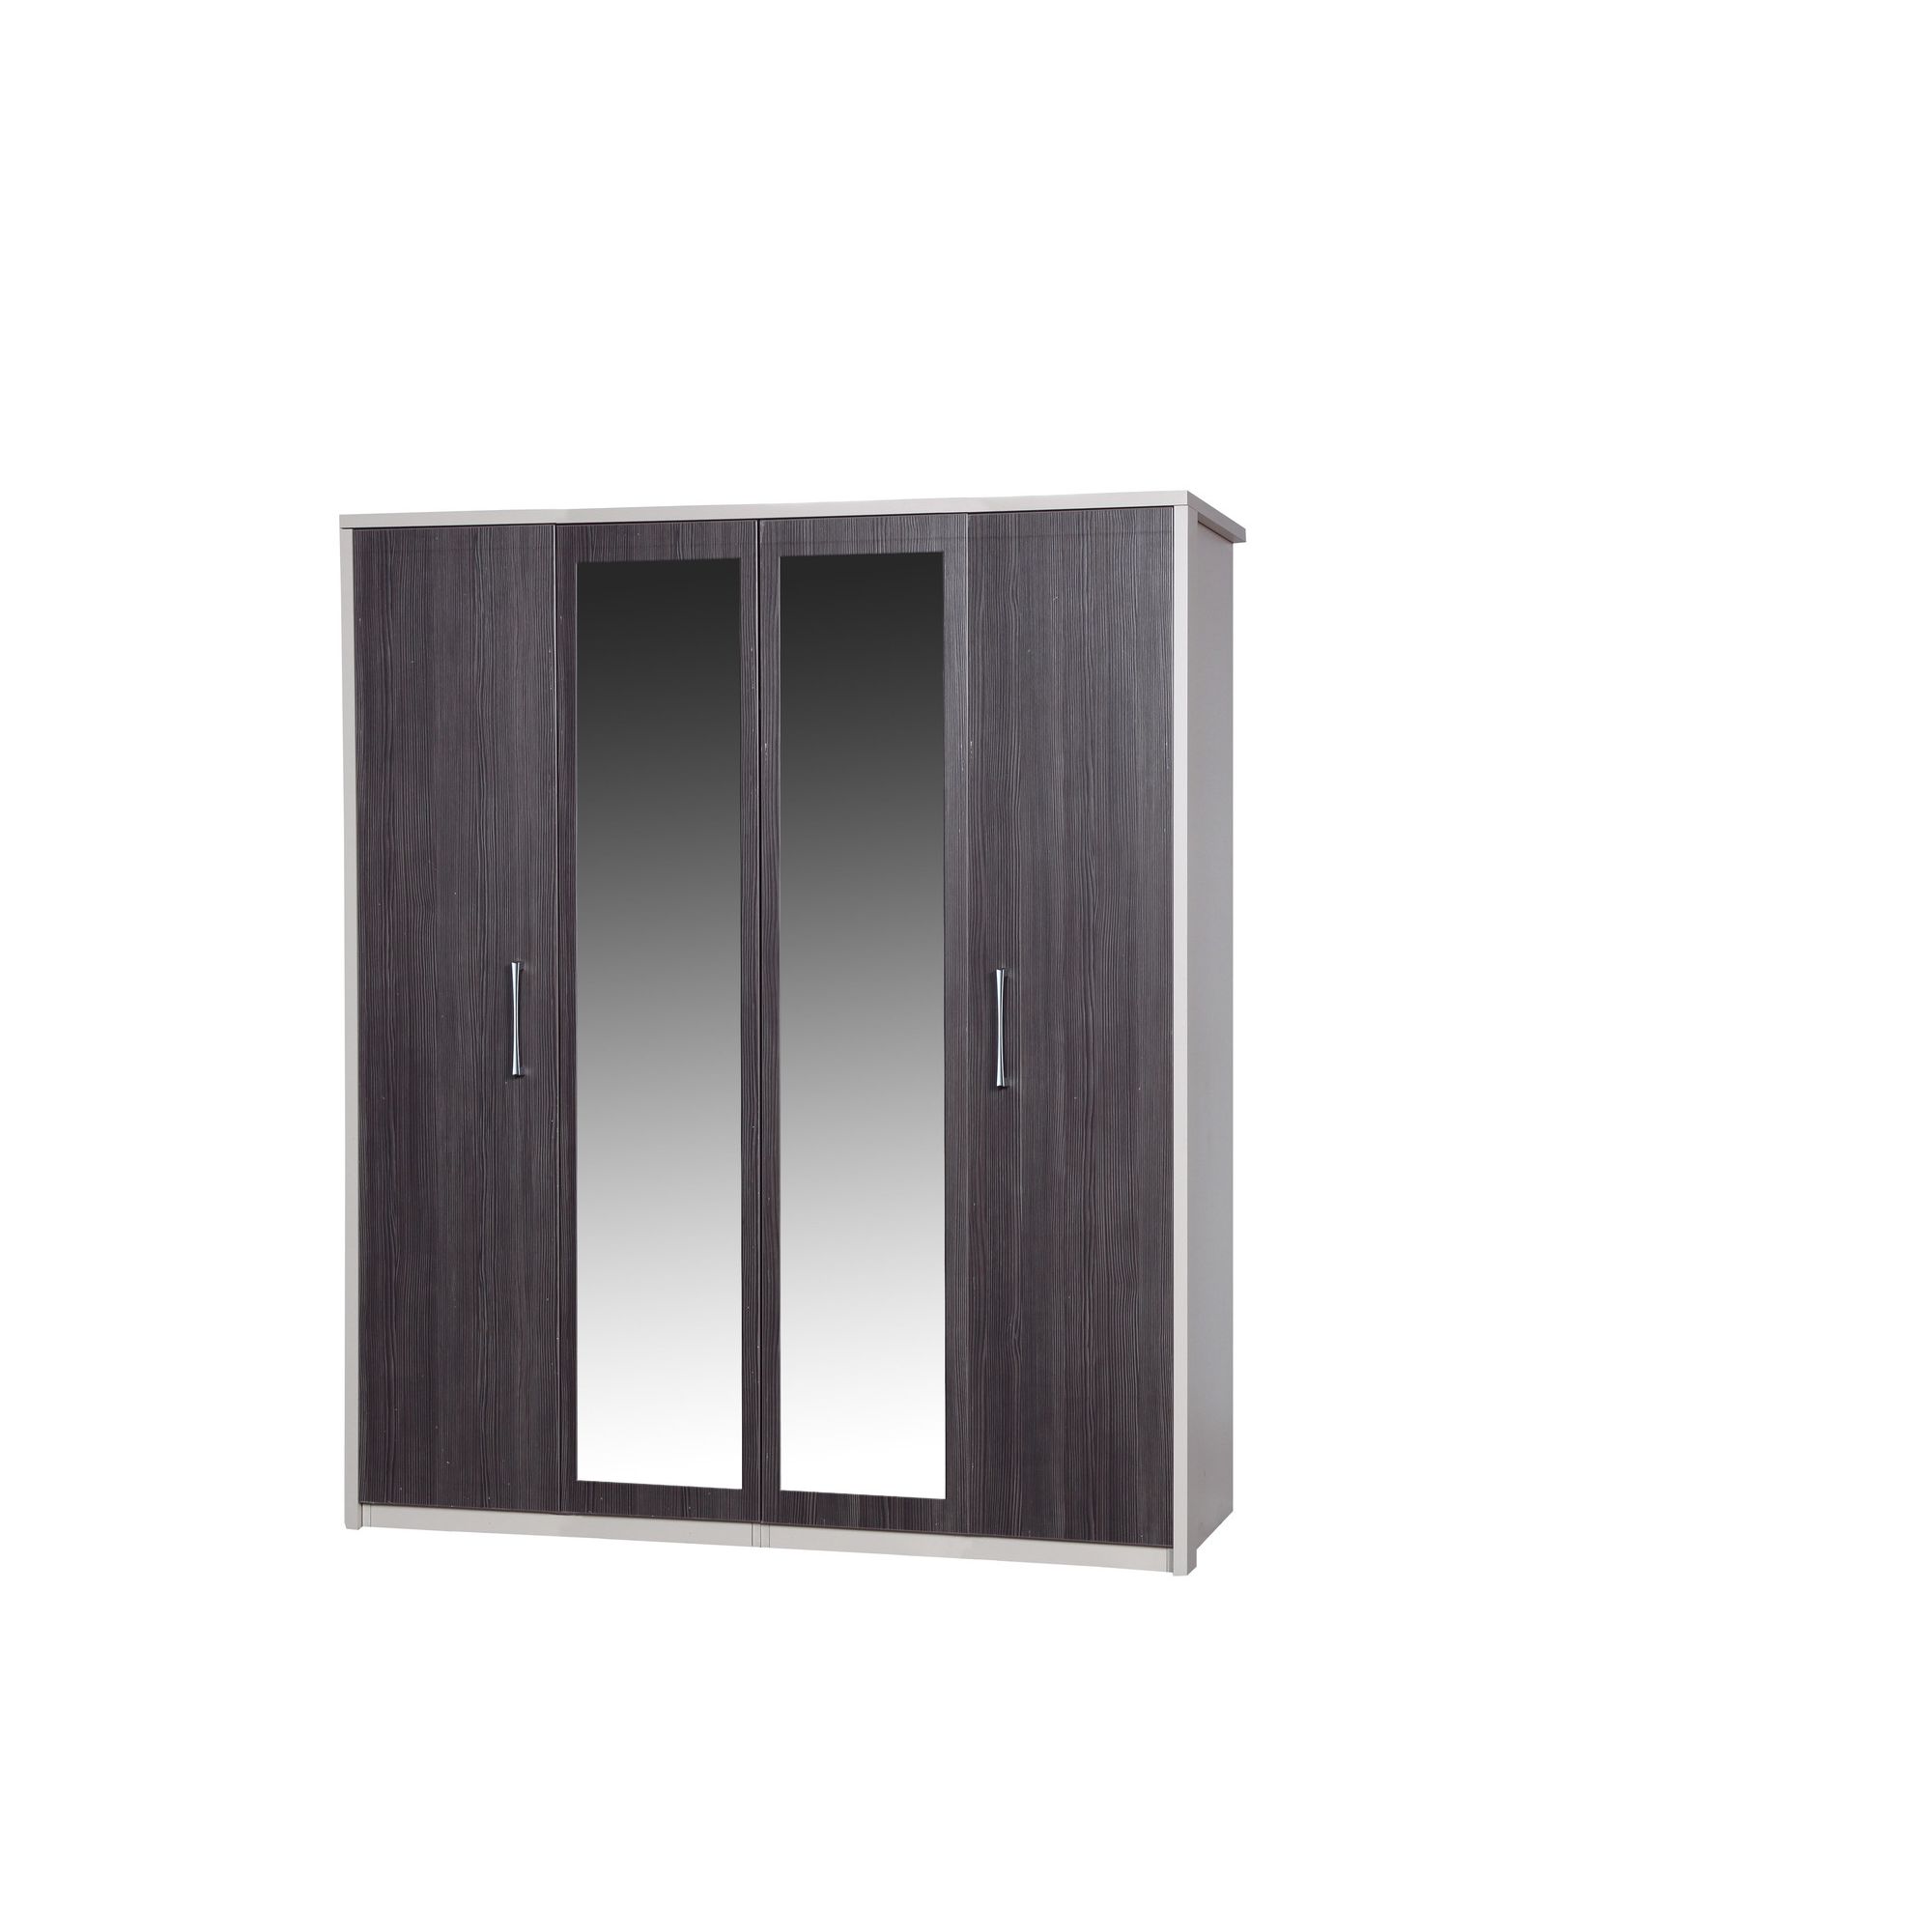 Alto Furniture Avola 4 Door Wardrobe with Mirror - Cream Carcass With Grey Avola at Tesco Direct